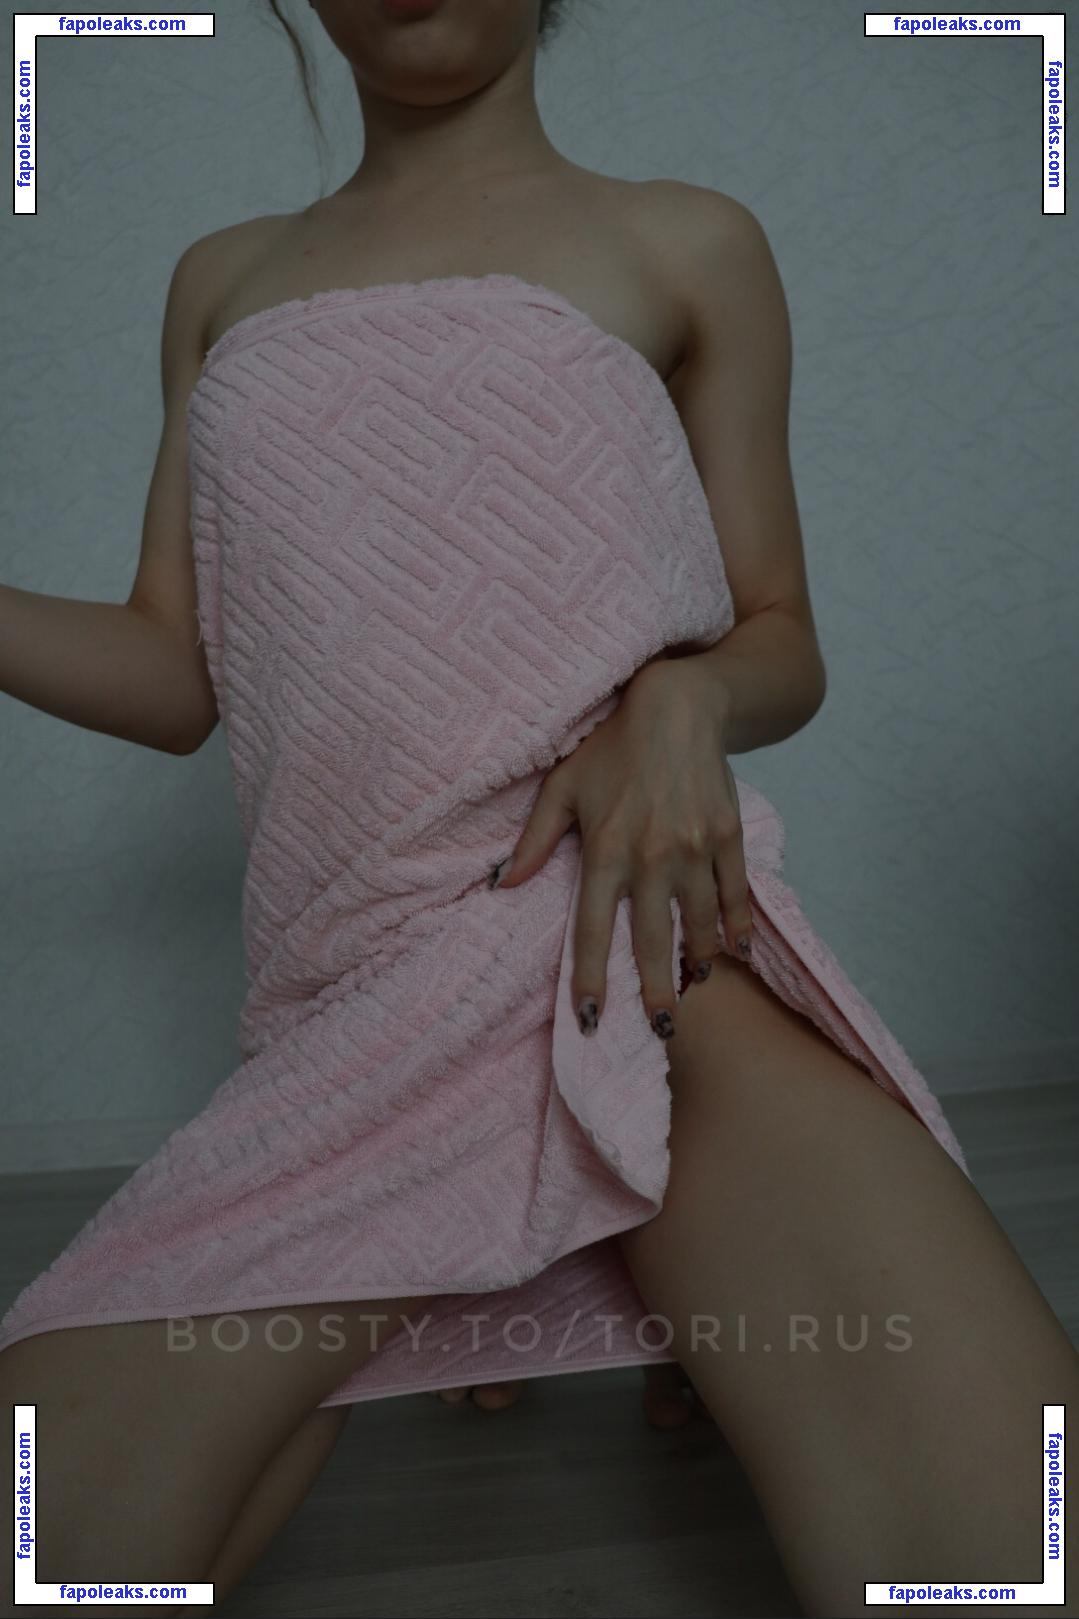 https://fapoleaks.com/images/r/a/rare-tori-nude/1/photo/rare-tori-nude_0038.jpeg